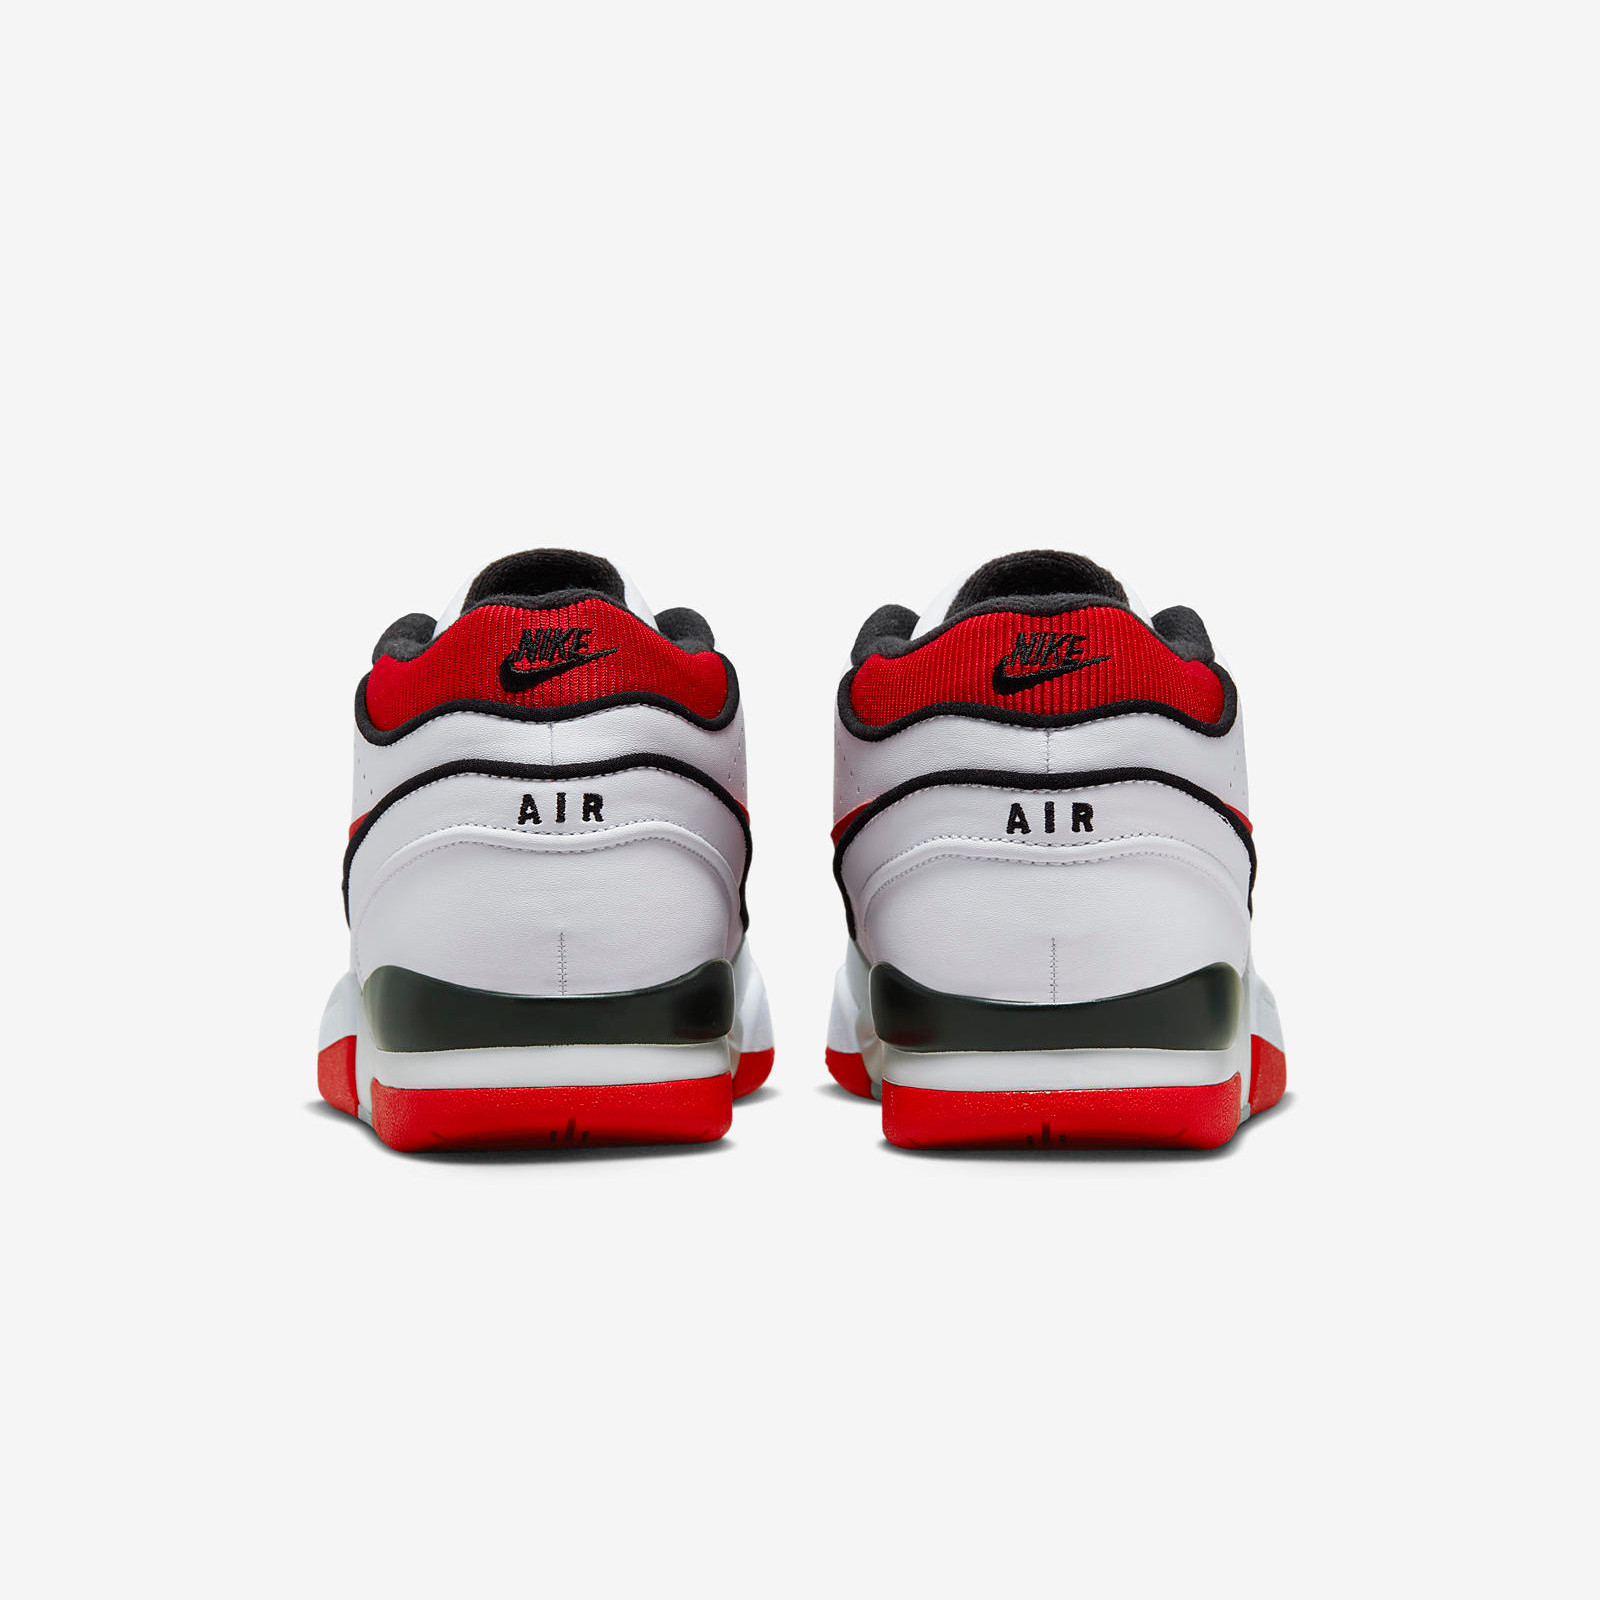 Billie x Nike
Air Alpha Force 88
Fire Red / White